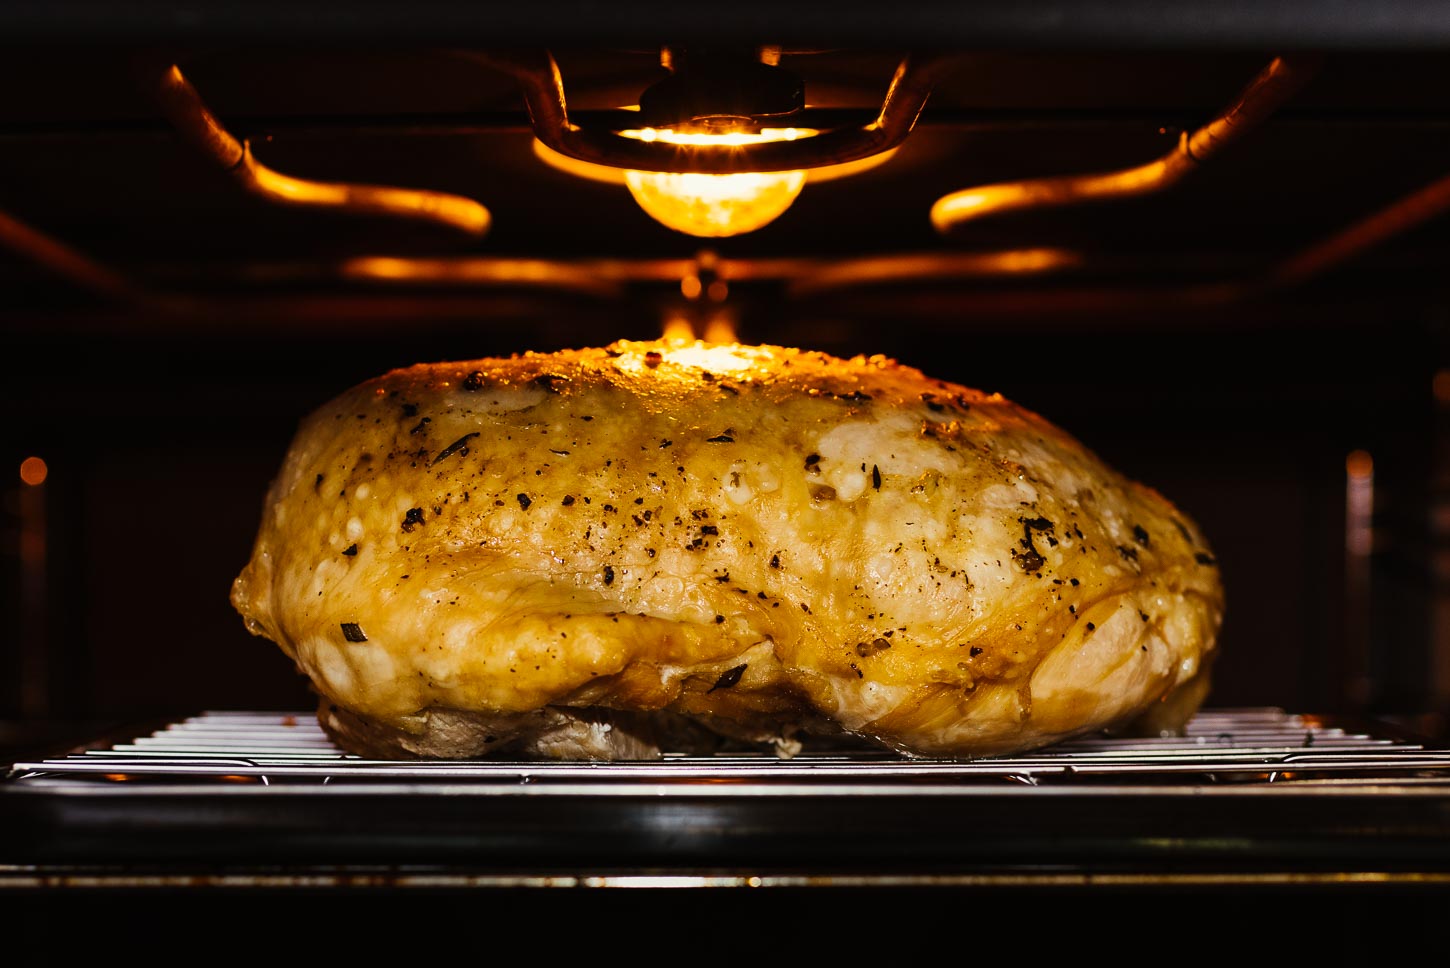 broiled turkey breast | sharefavoritefood.com